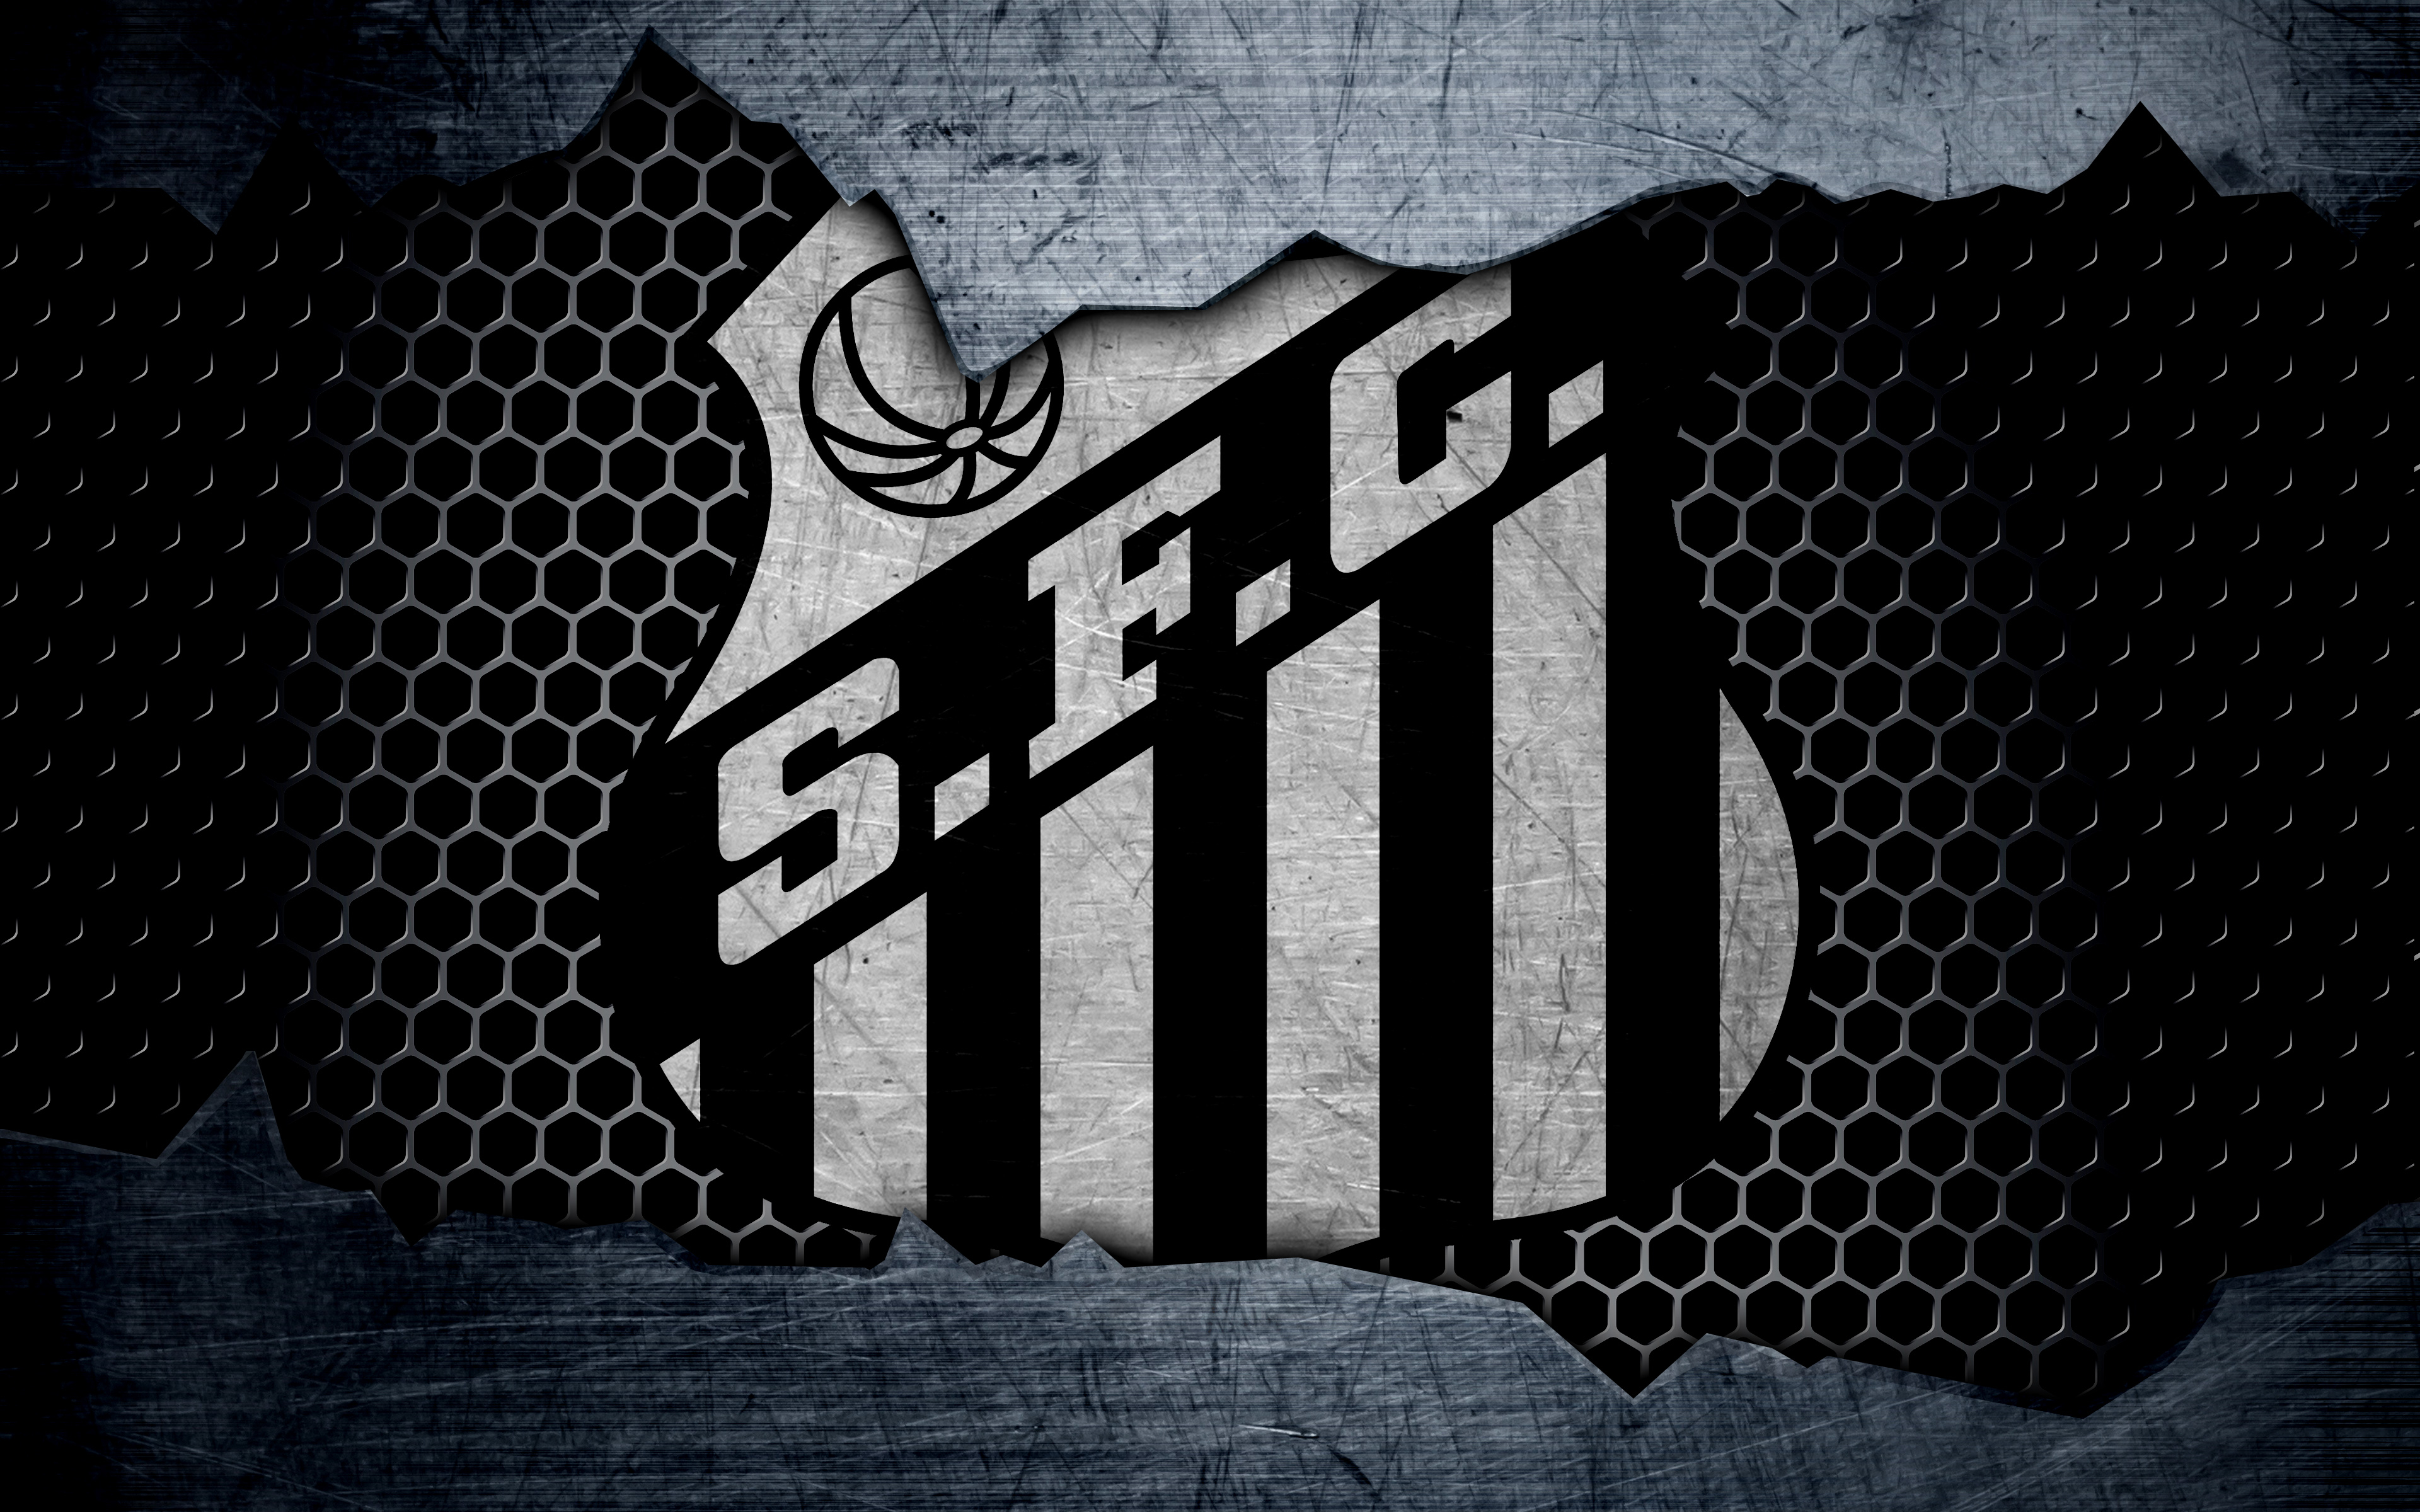 sports, santos fc, emblem, logo, soccer